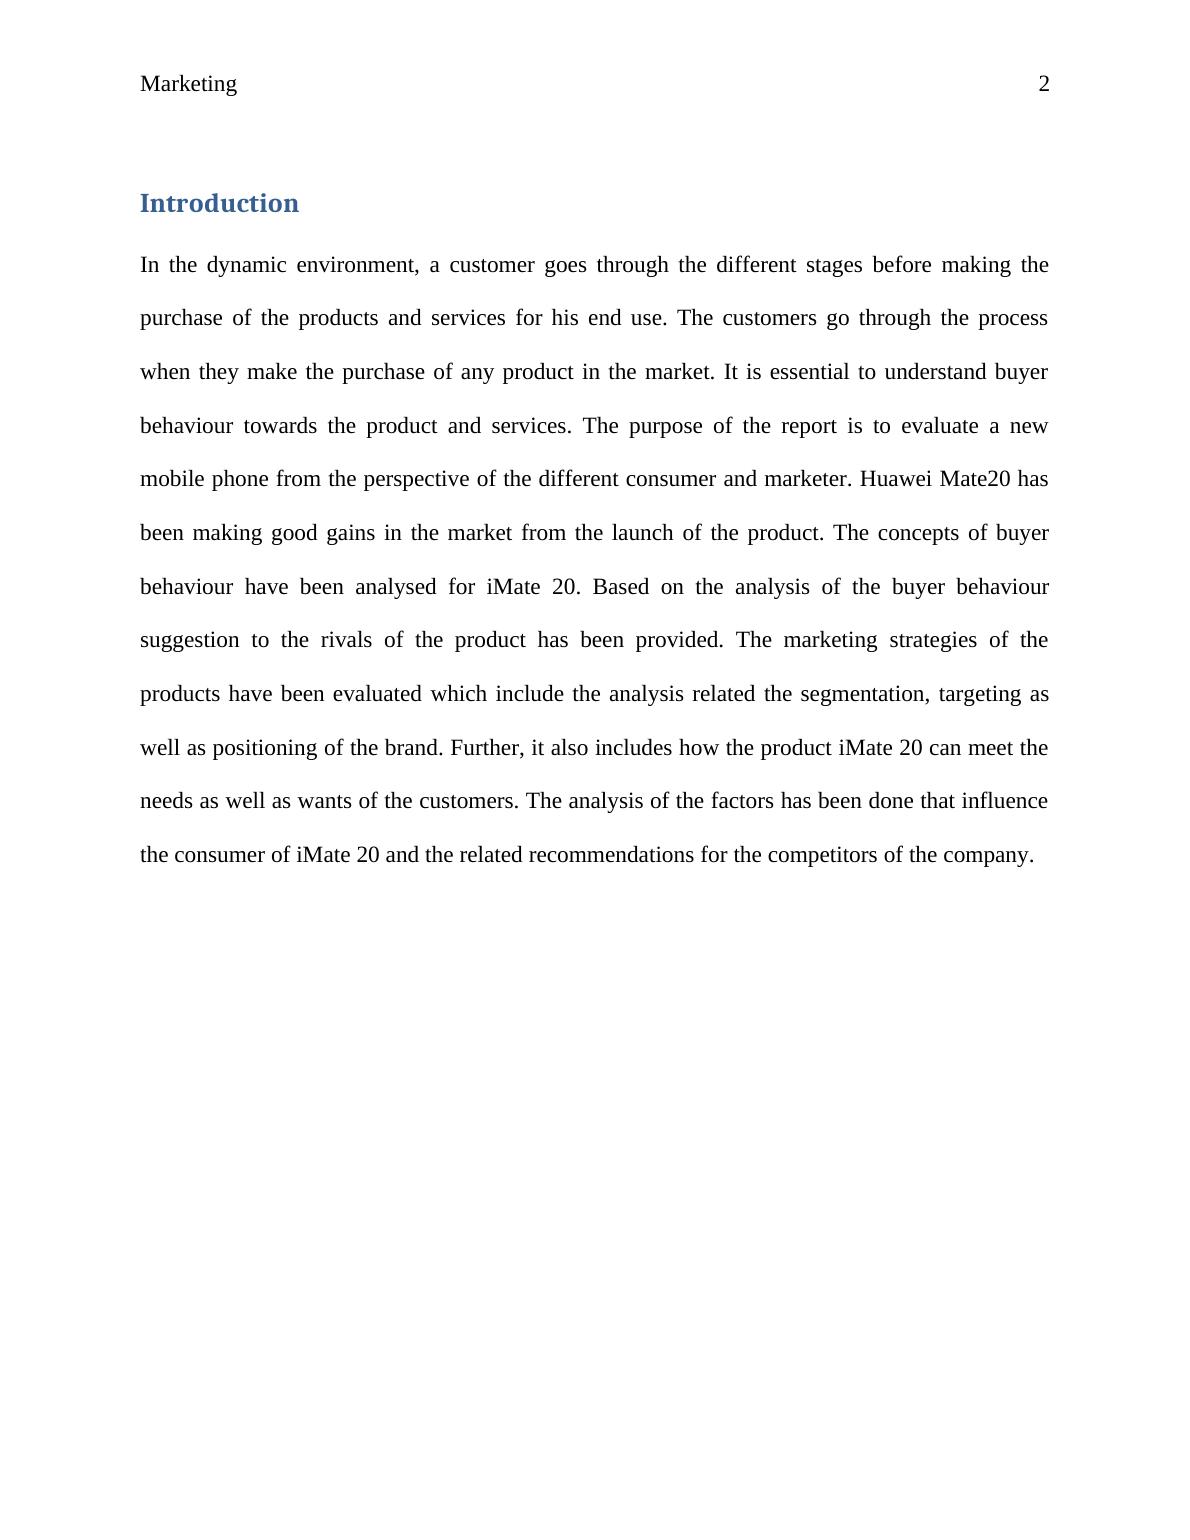 Buyer Behavior Analysis of Huawei Mate20_3